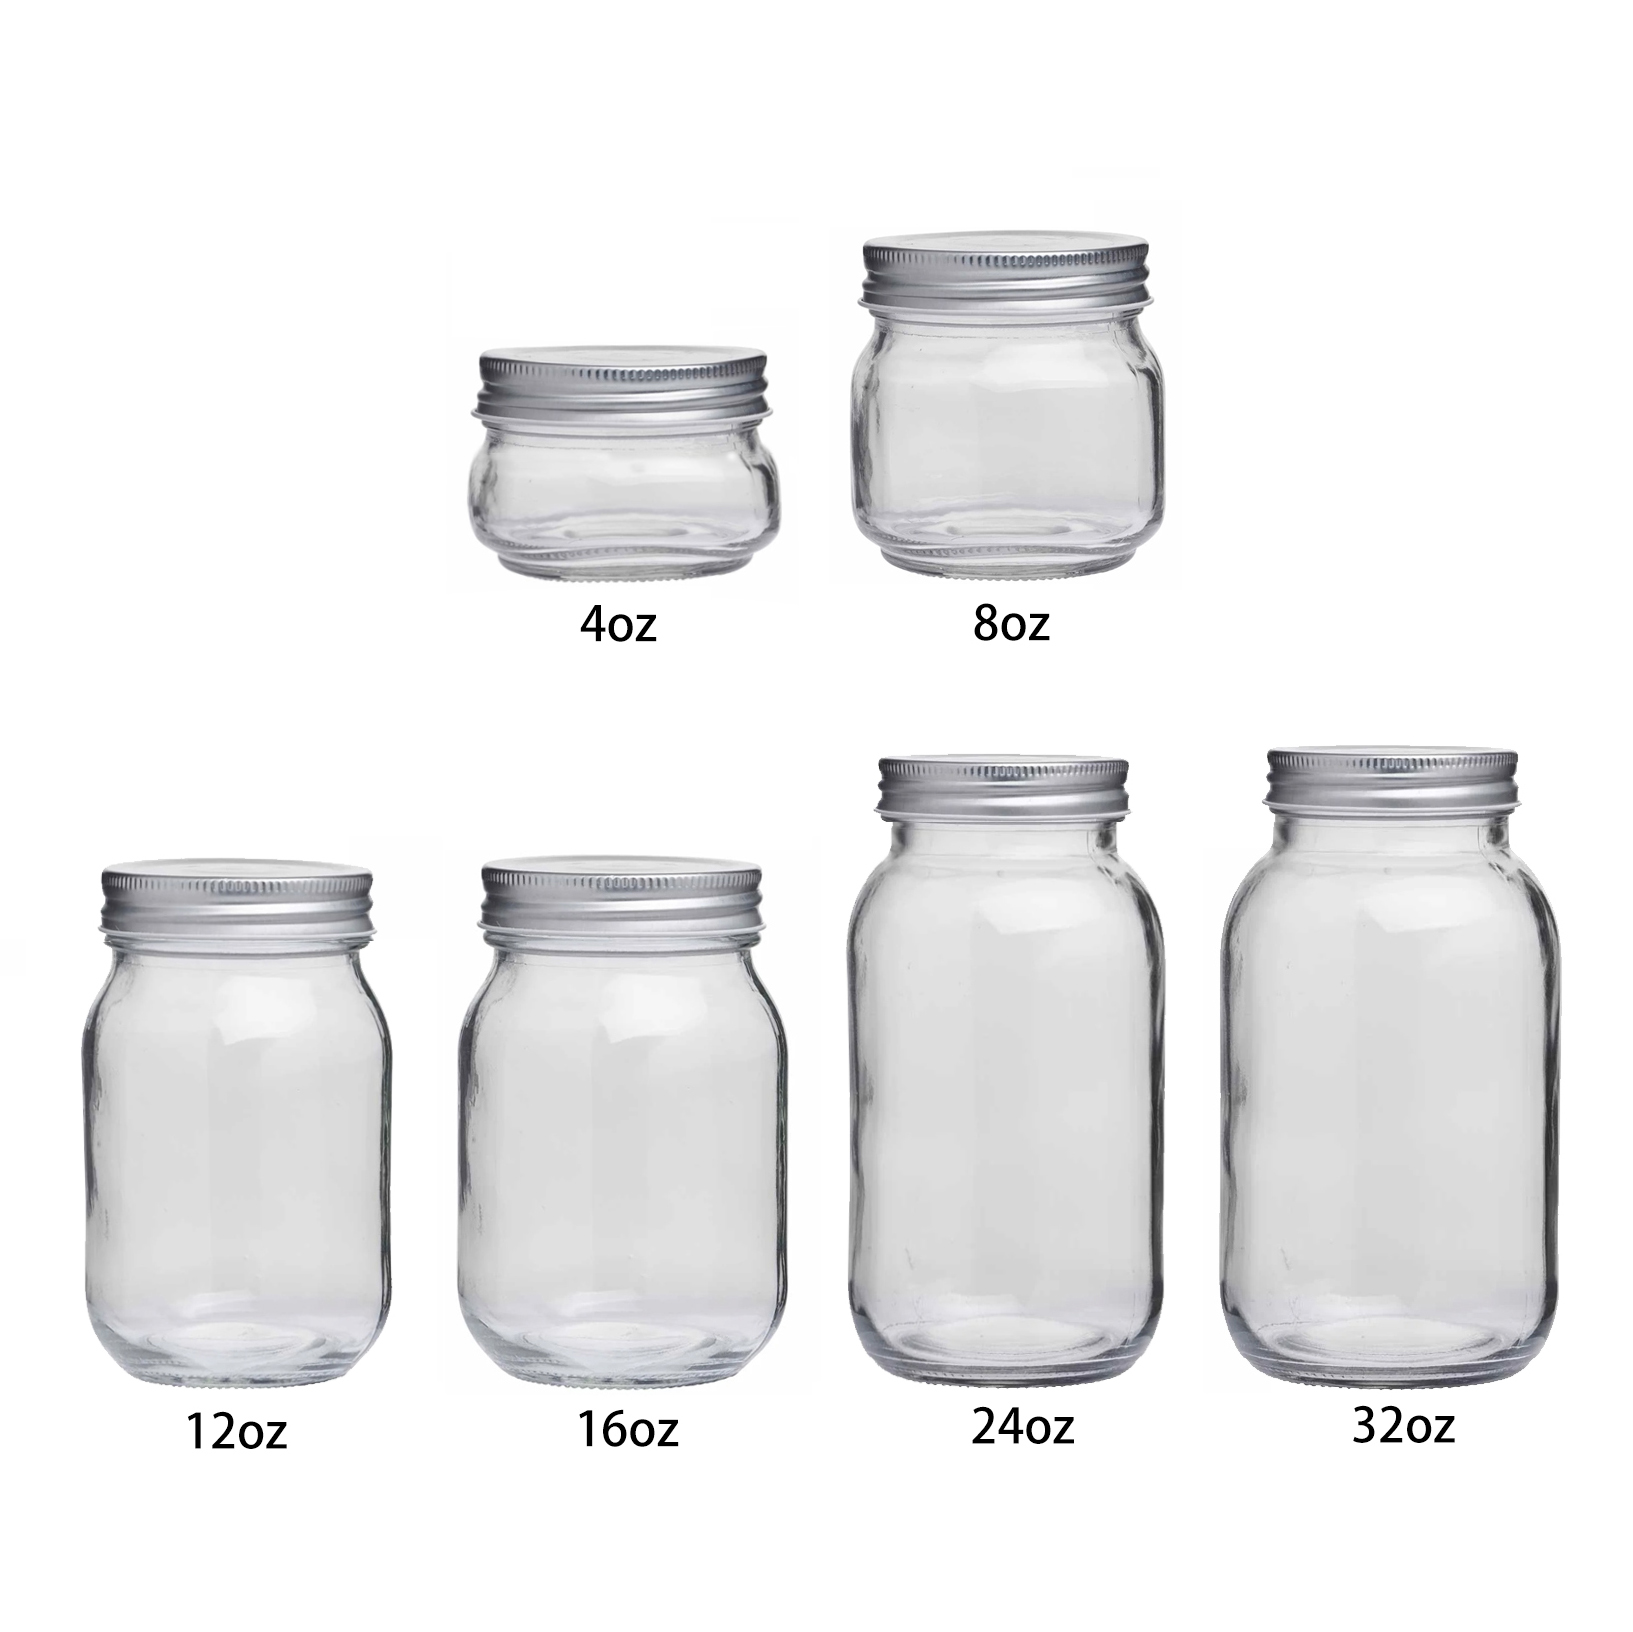 https://myeasyglass.com/wp-content/uploads/2020/10/mason-glass-jars.jpg